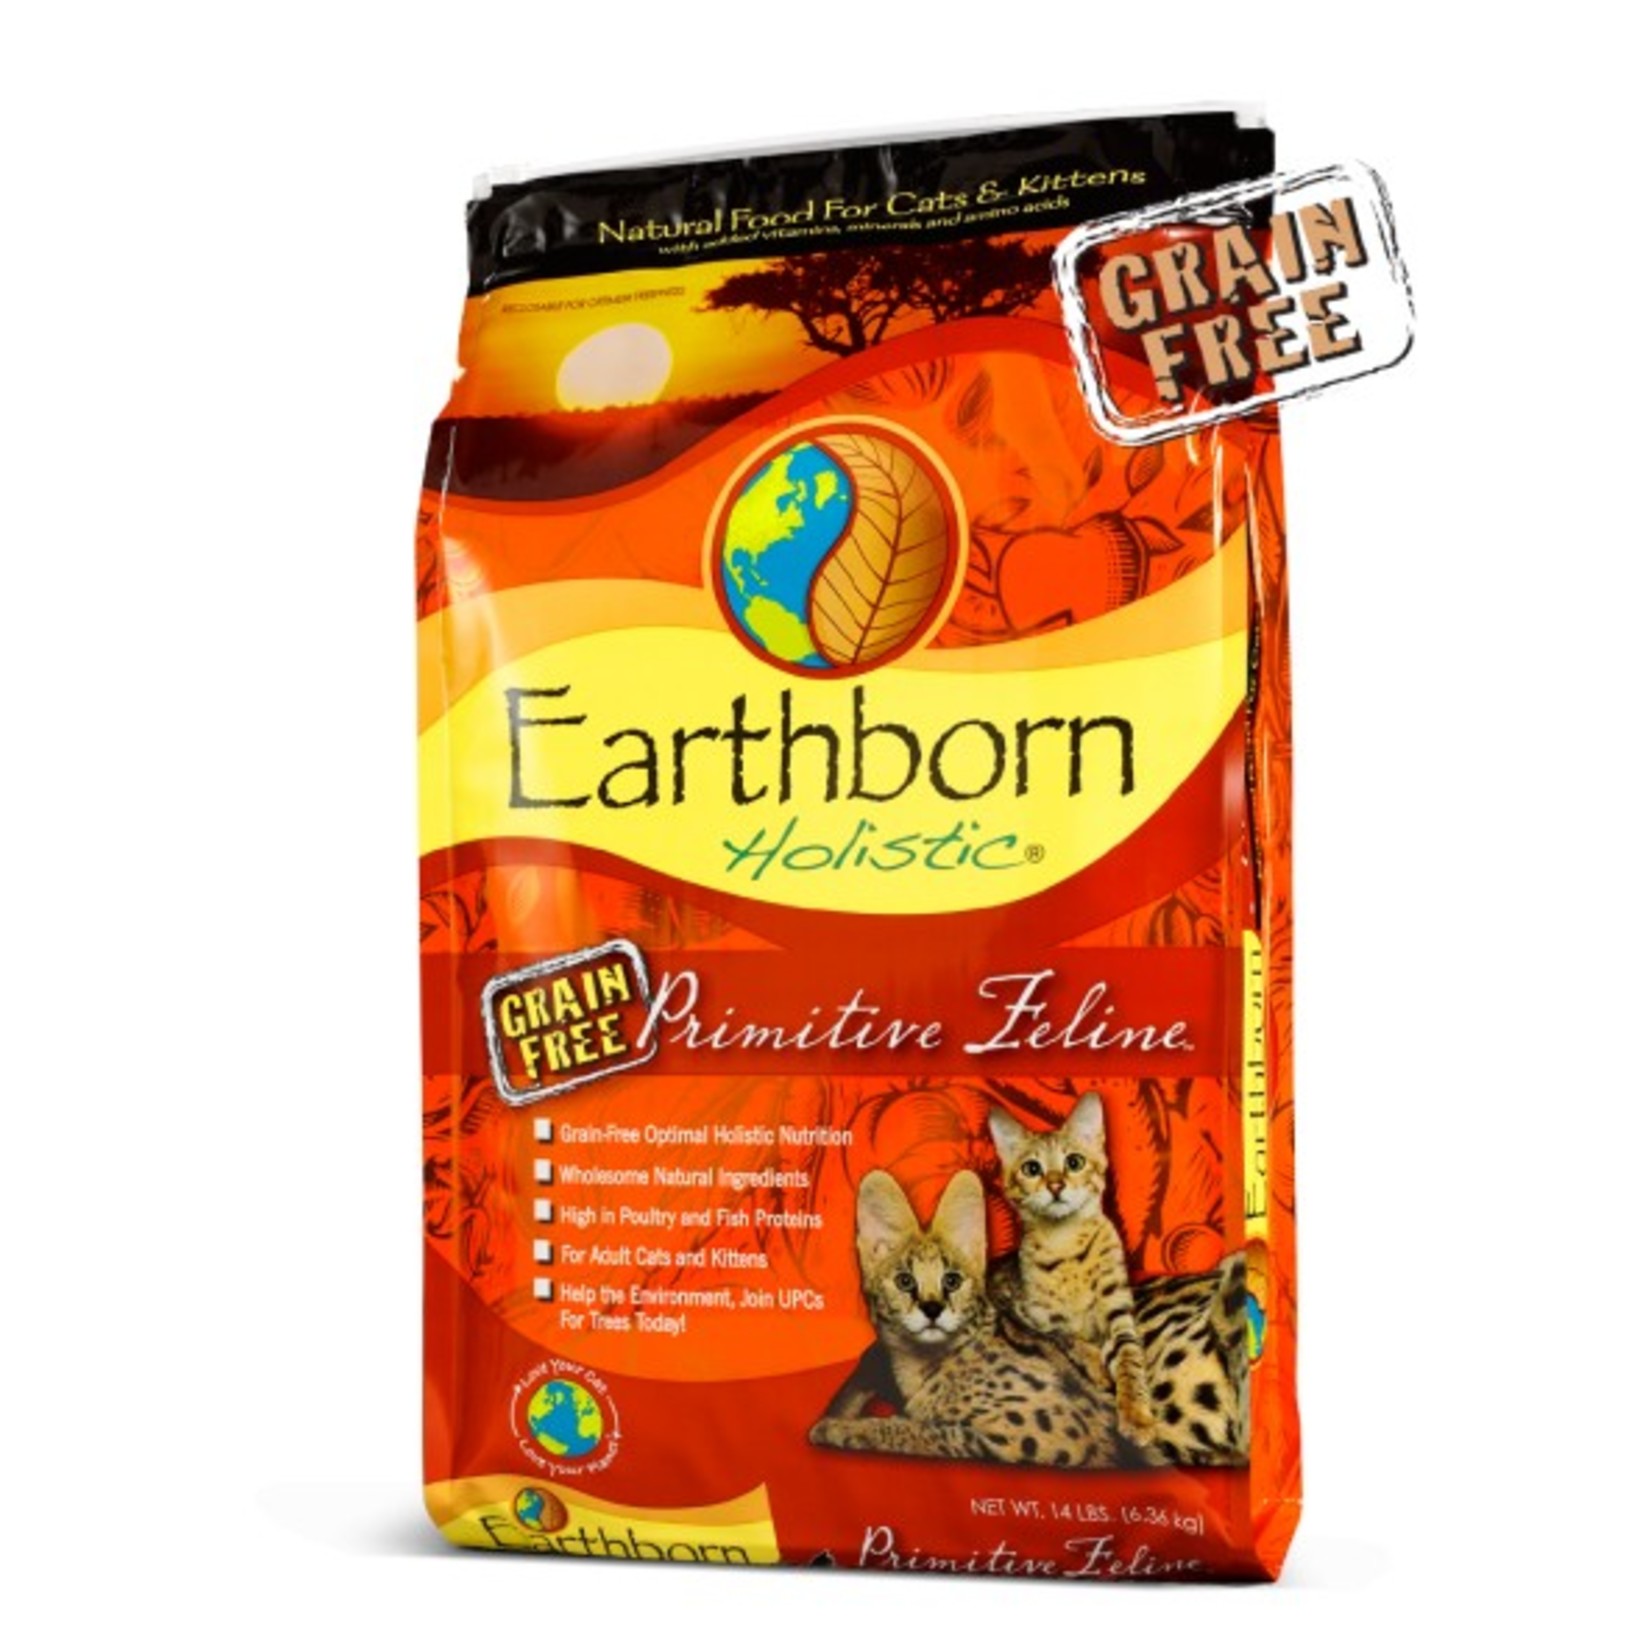 Earthborn Earthborn Primitive Feline Cat Food